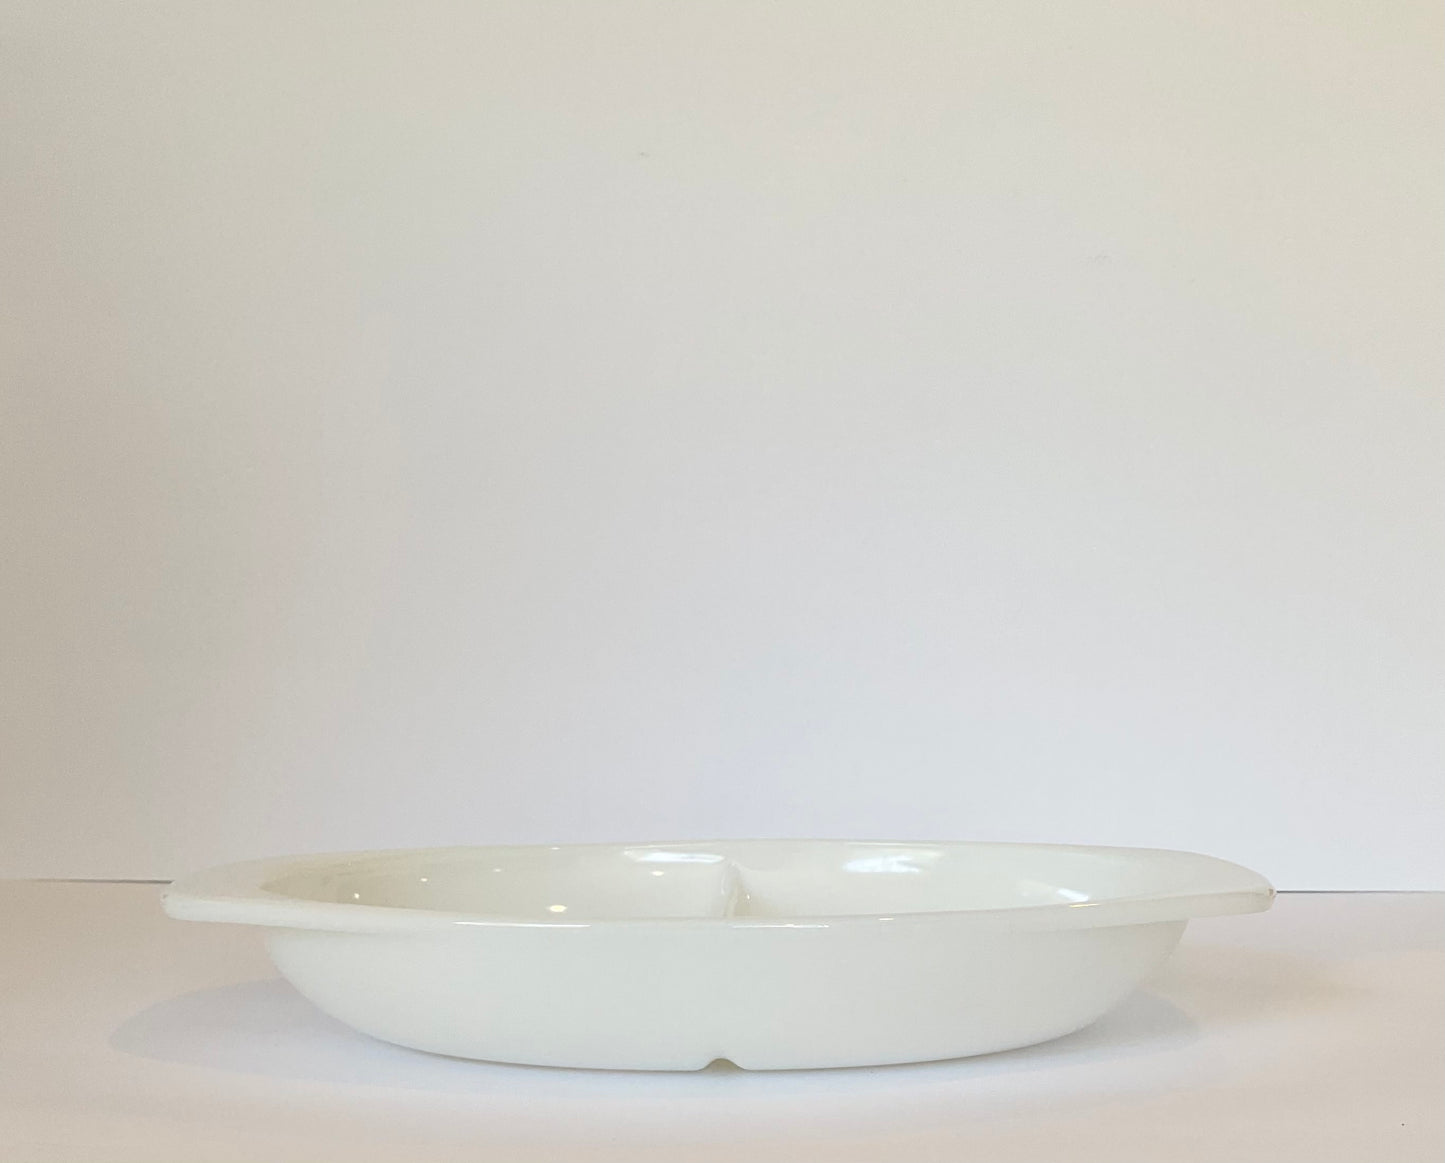 Vintage Pyrex Milk Glass Oval Divided Casserole Dish 1 1/2 Quart - #1063